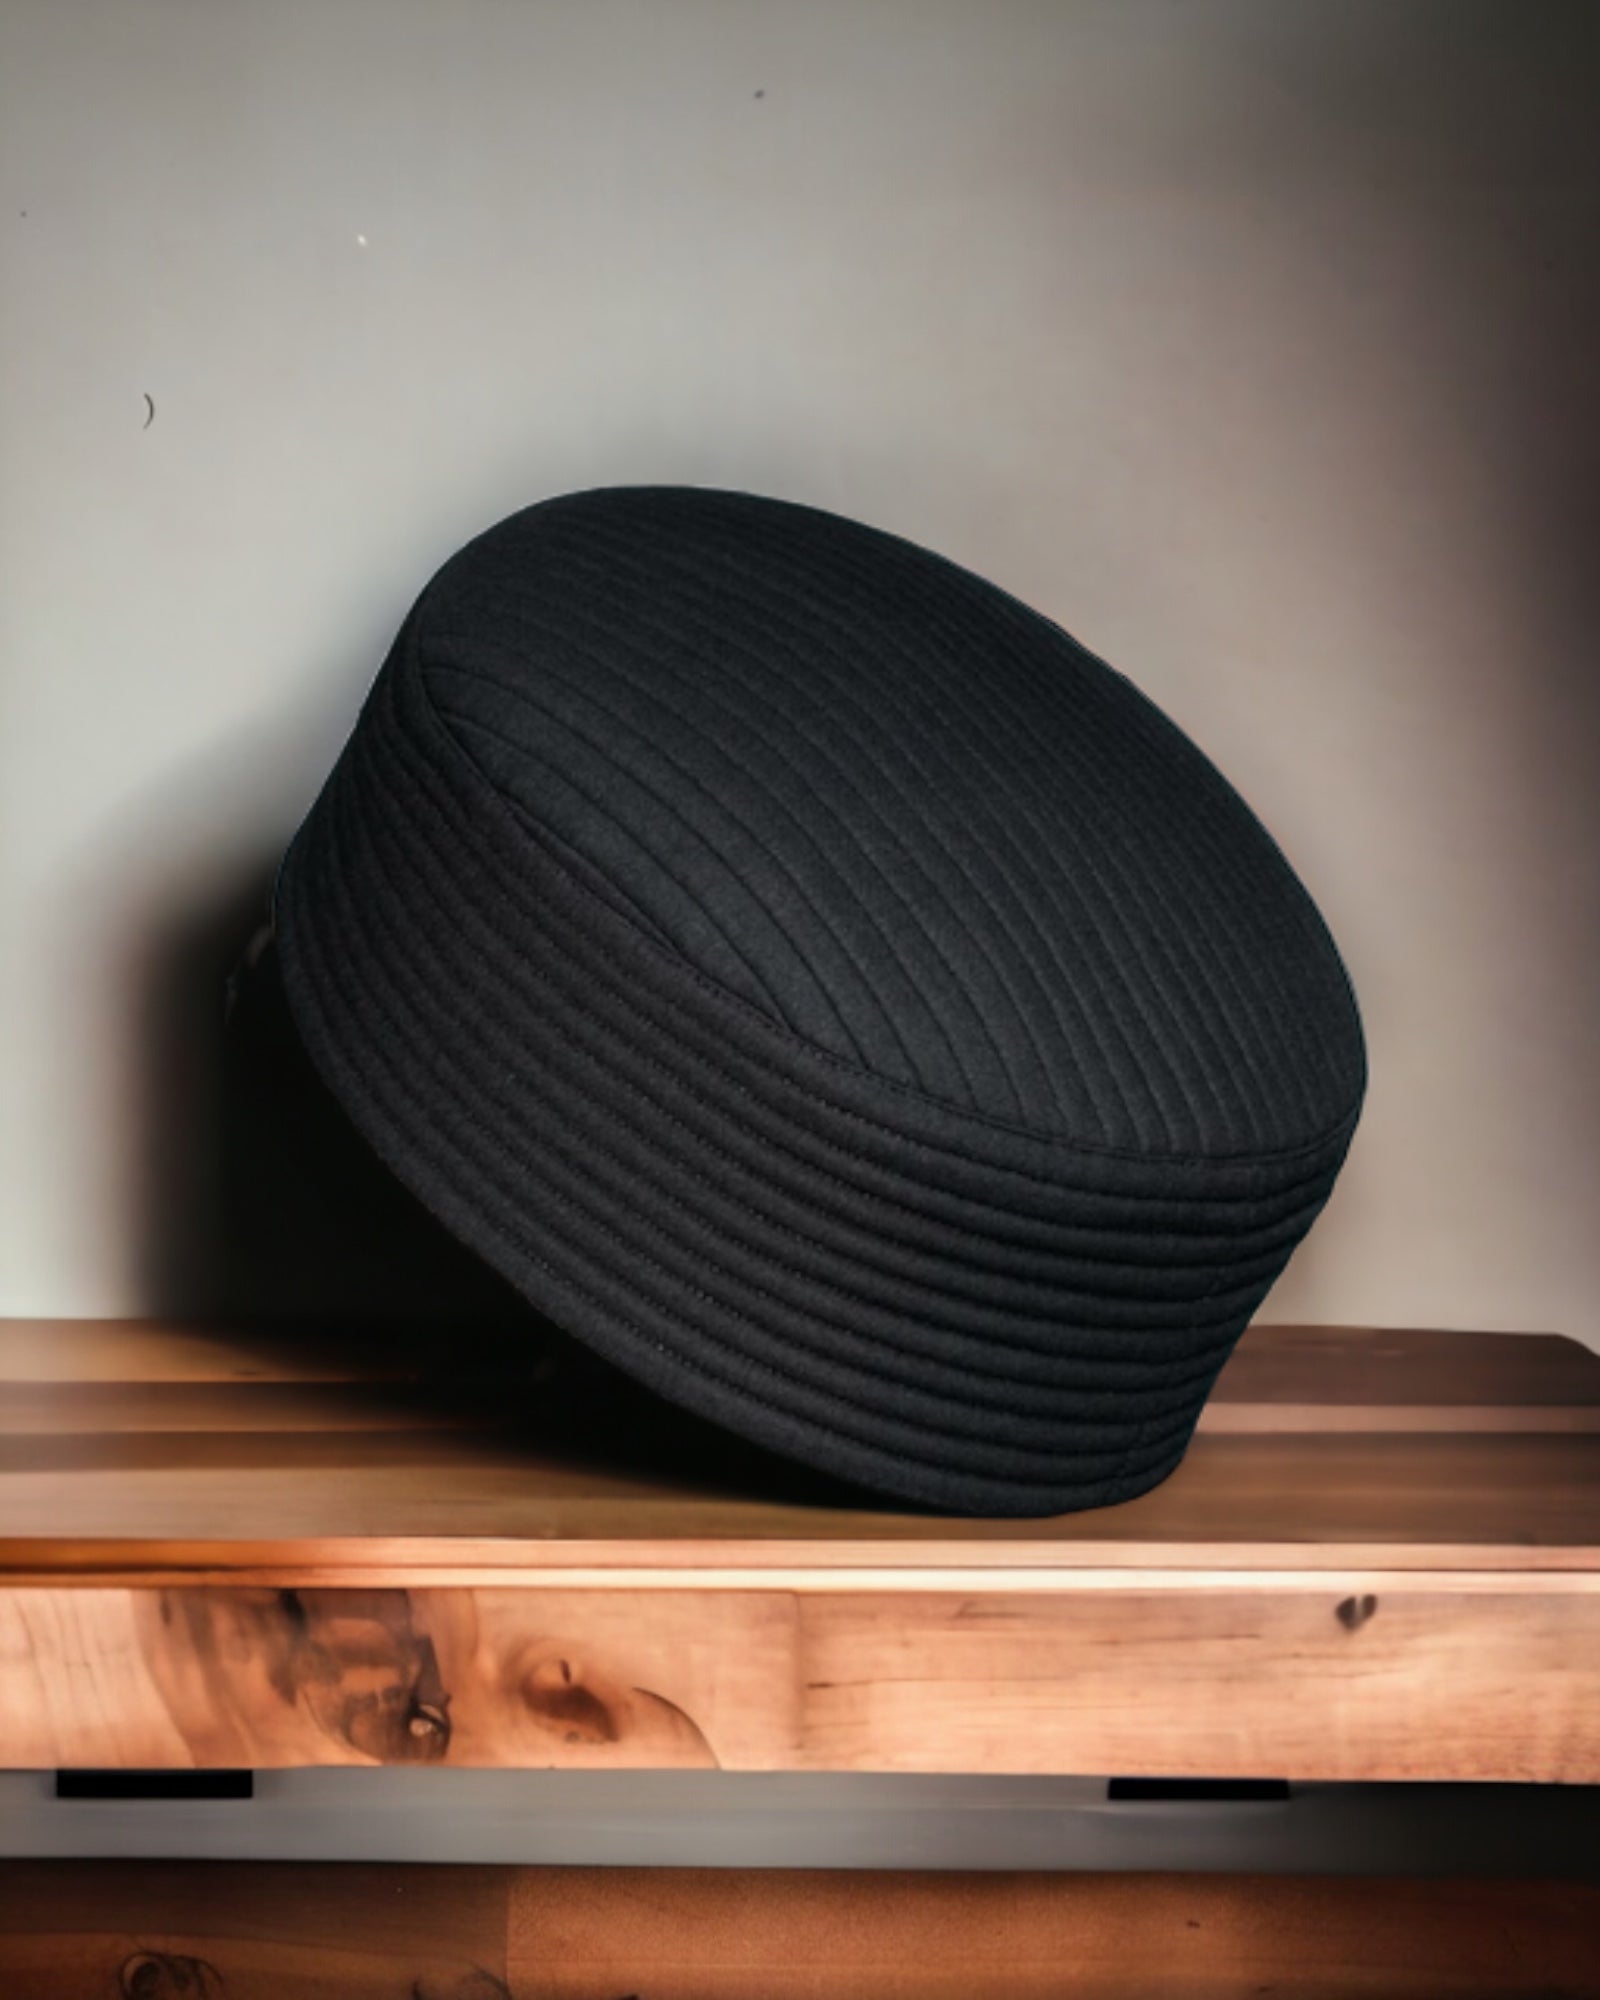 Black Quilted Islamic Cap (Kufi, Topi)